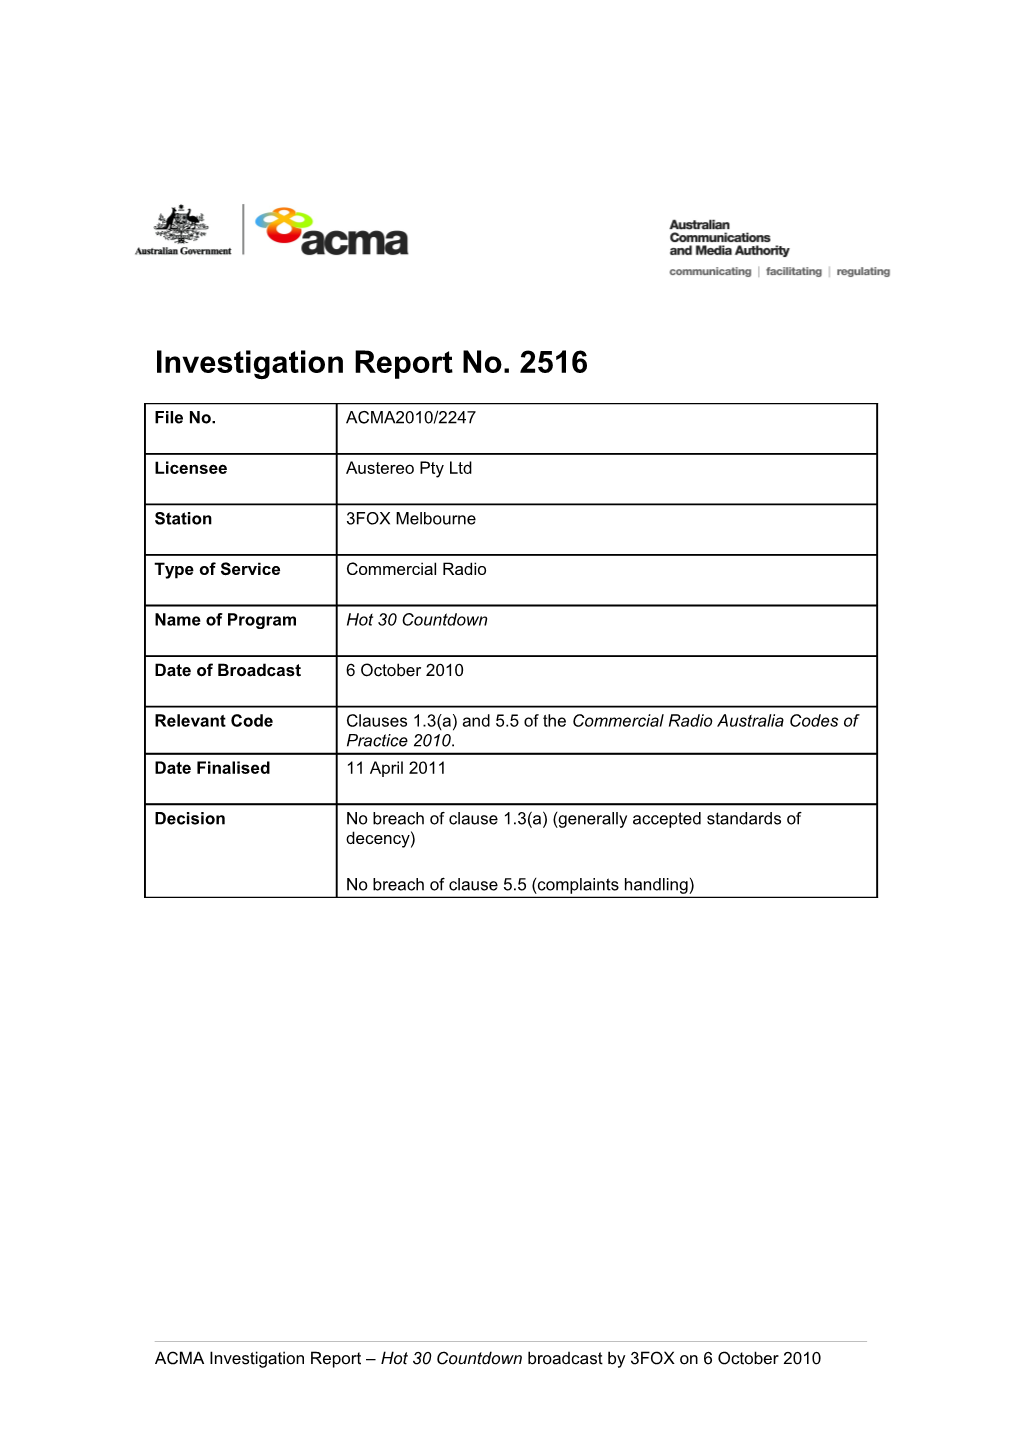 3FOX Melbourne - ACMA Investigation Report 2516